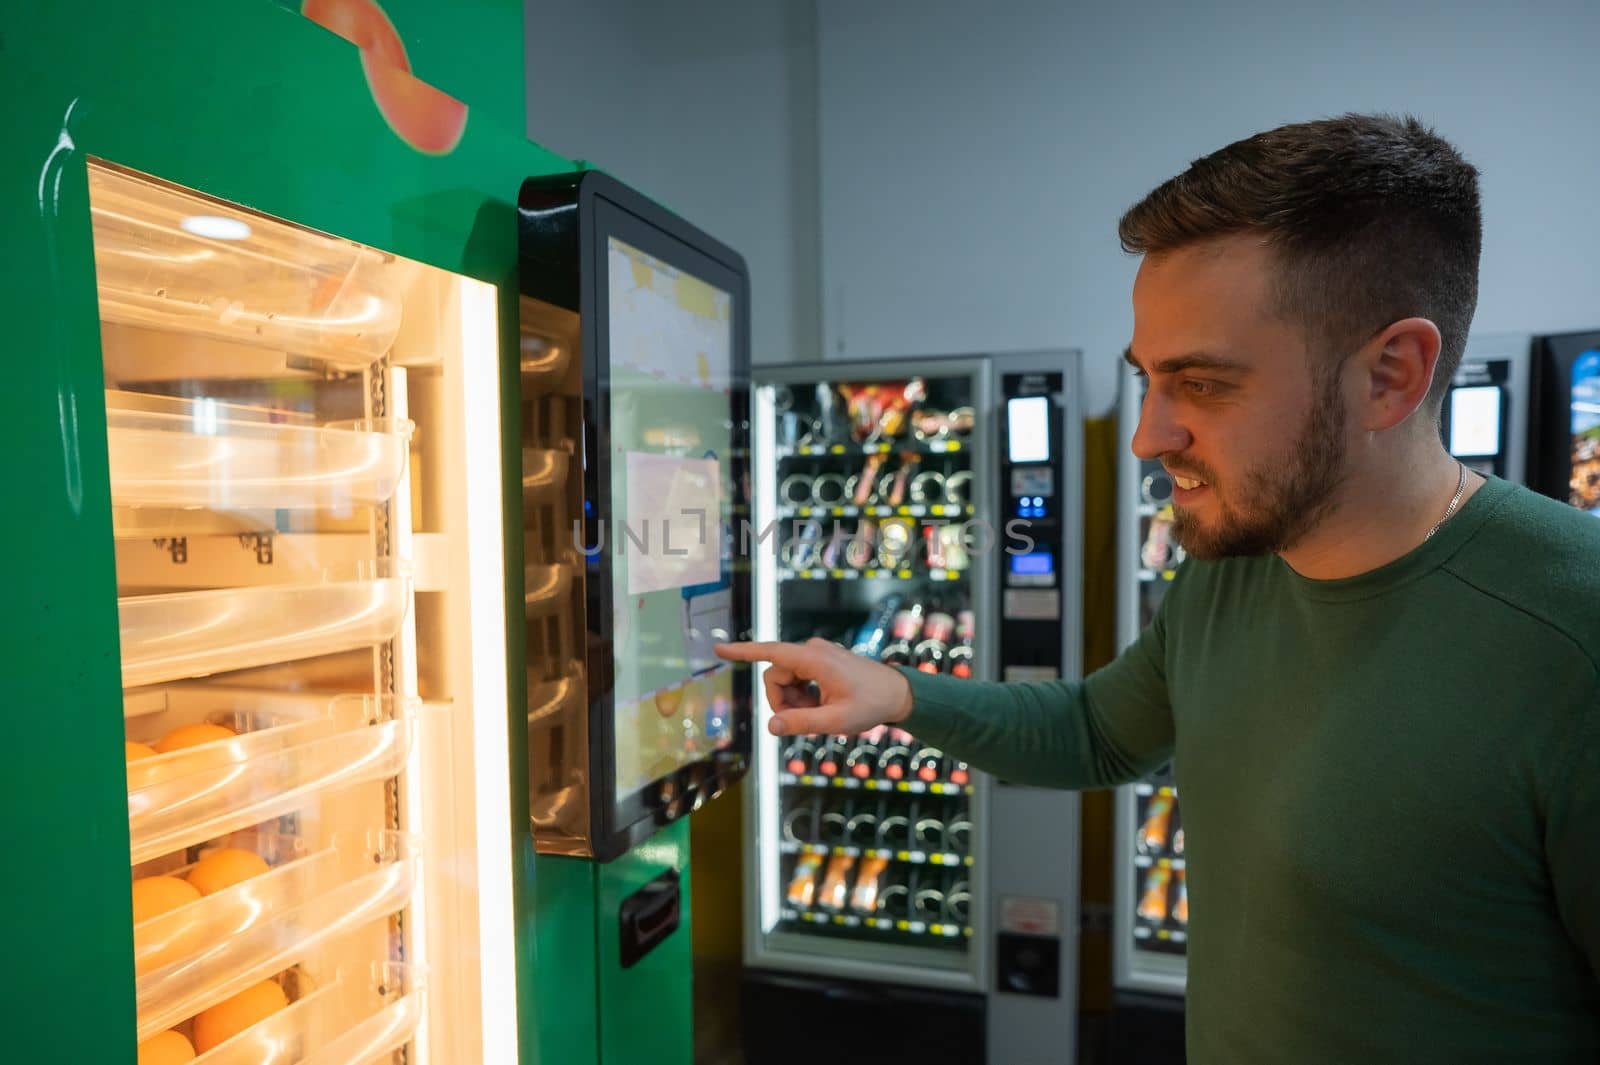 Caucasian man buys freshly squeezed orange juice from vending machine